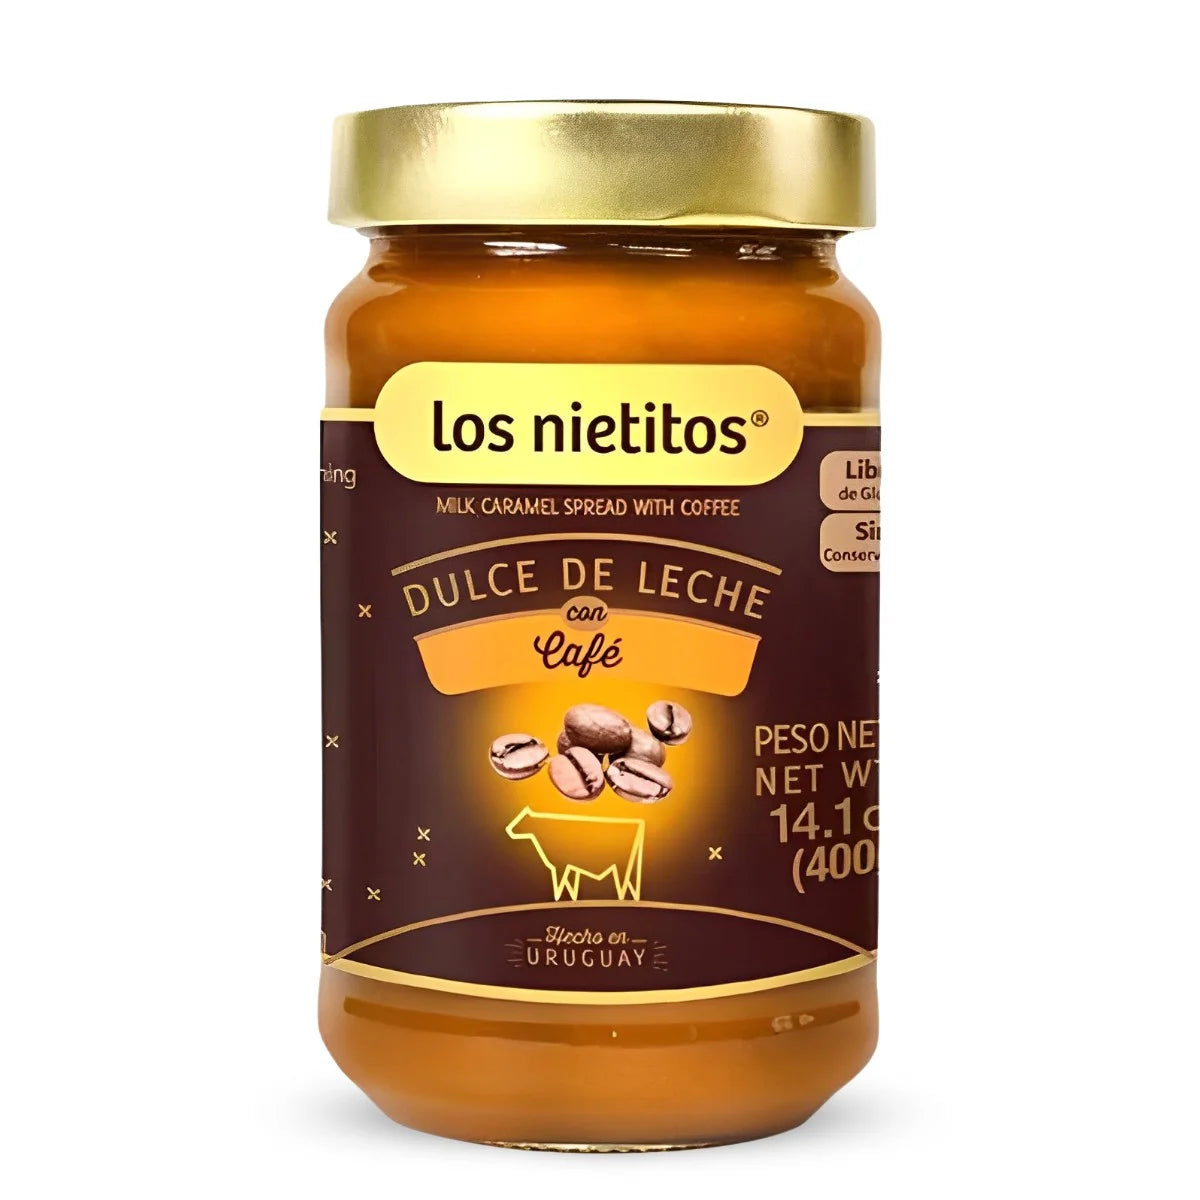 LOS NIETITOS - Coffee Dulce De Leche Spread - 400g - FINAL SALE - EXPIRED or CLOSE TO EXPIRY